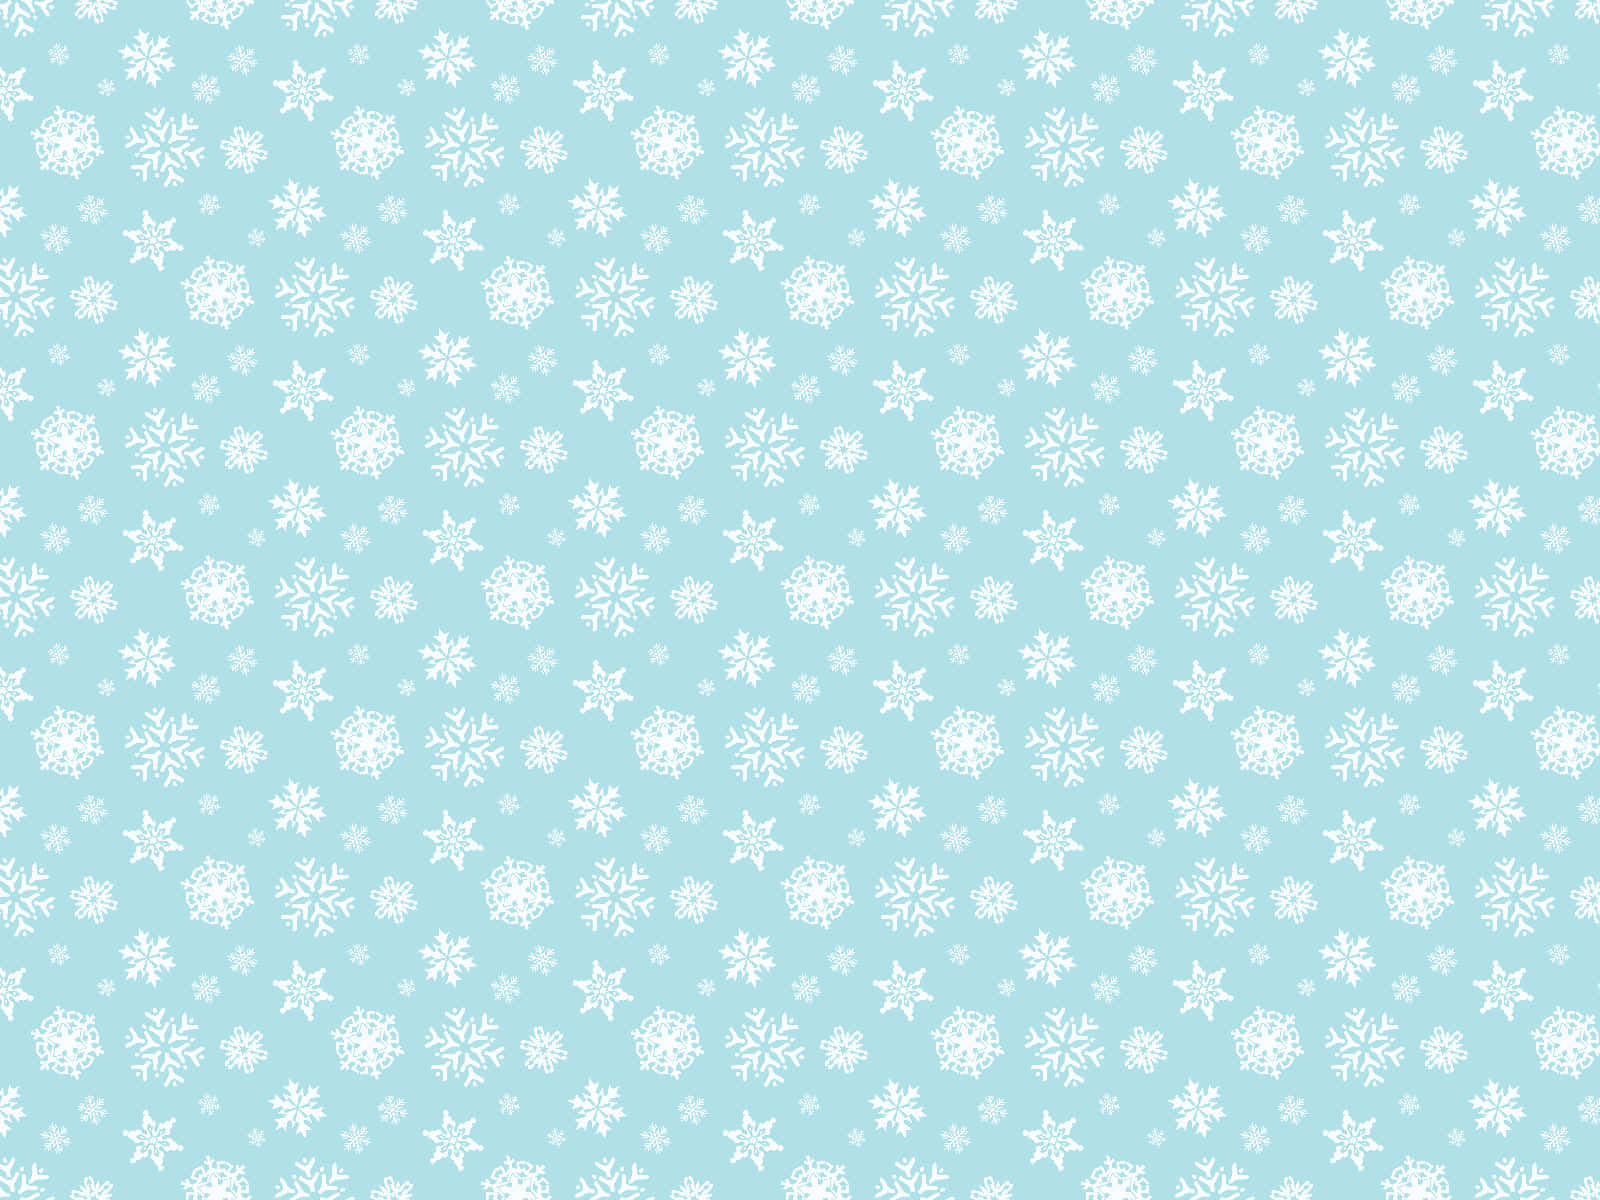 Ettblått Snöflingemönster Med Vita Snöflingor Wallpaper